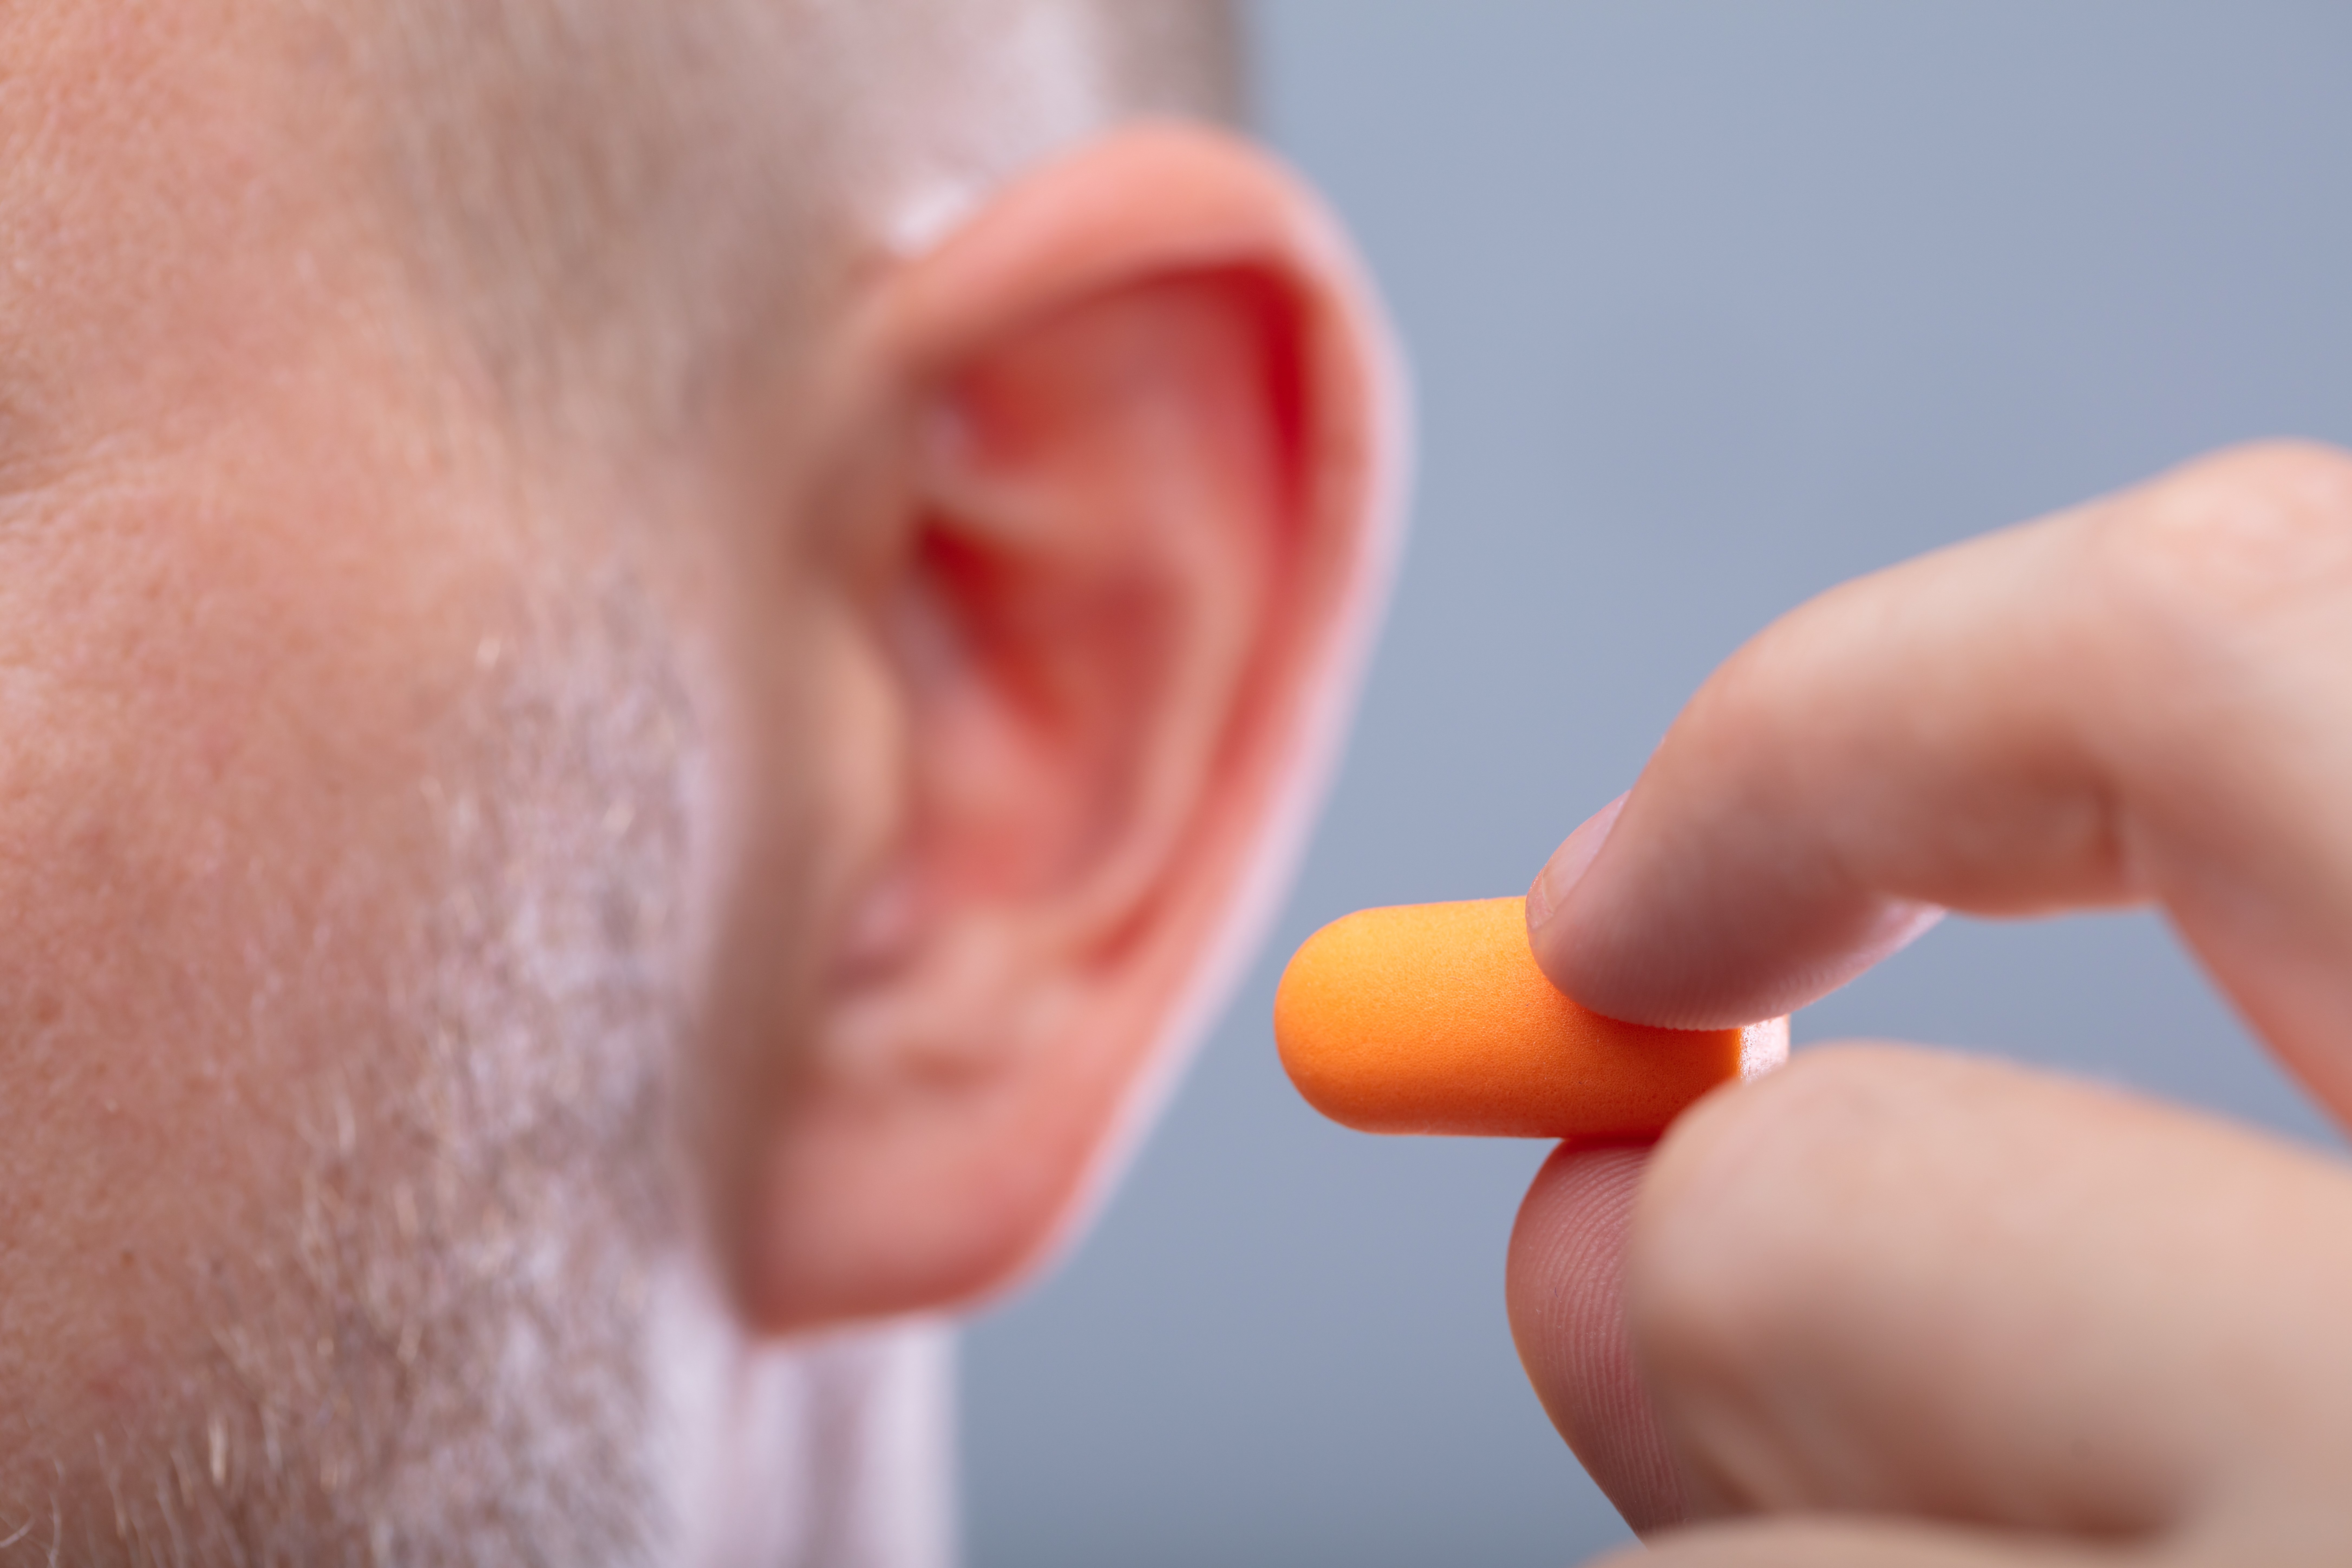 Ear plugs. Image credit: Shutterstock